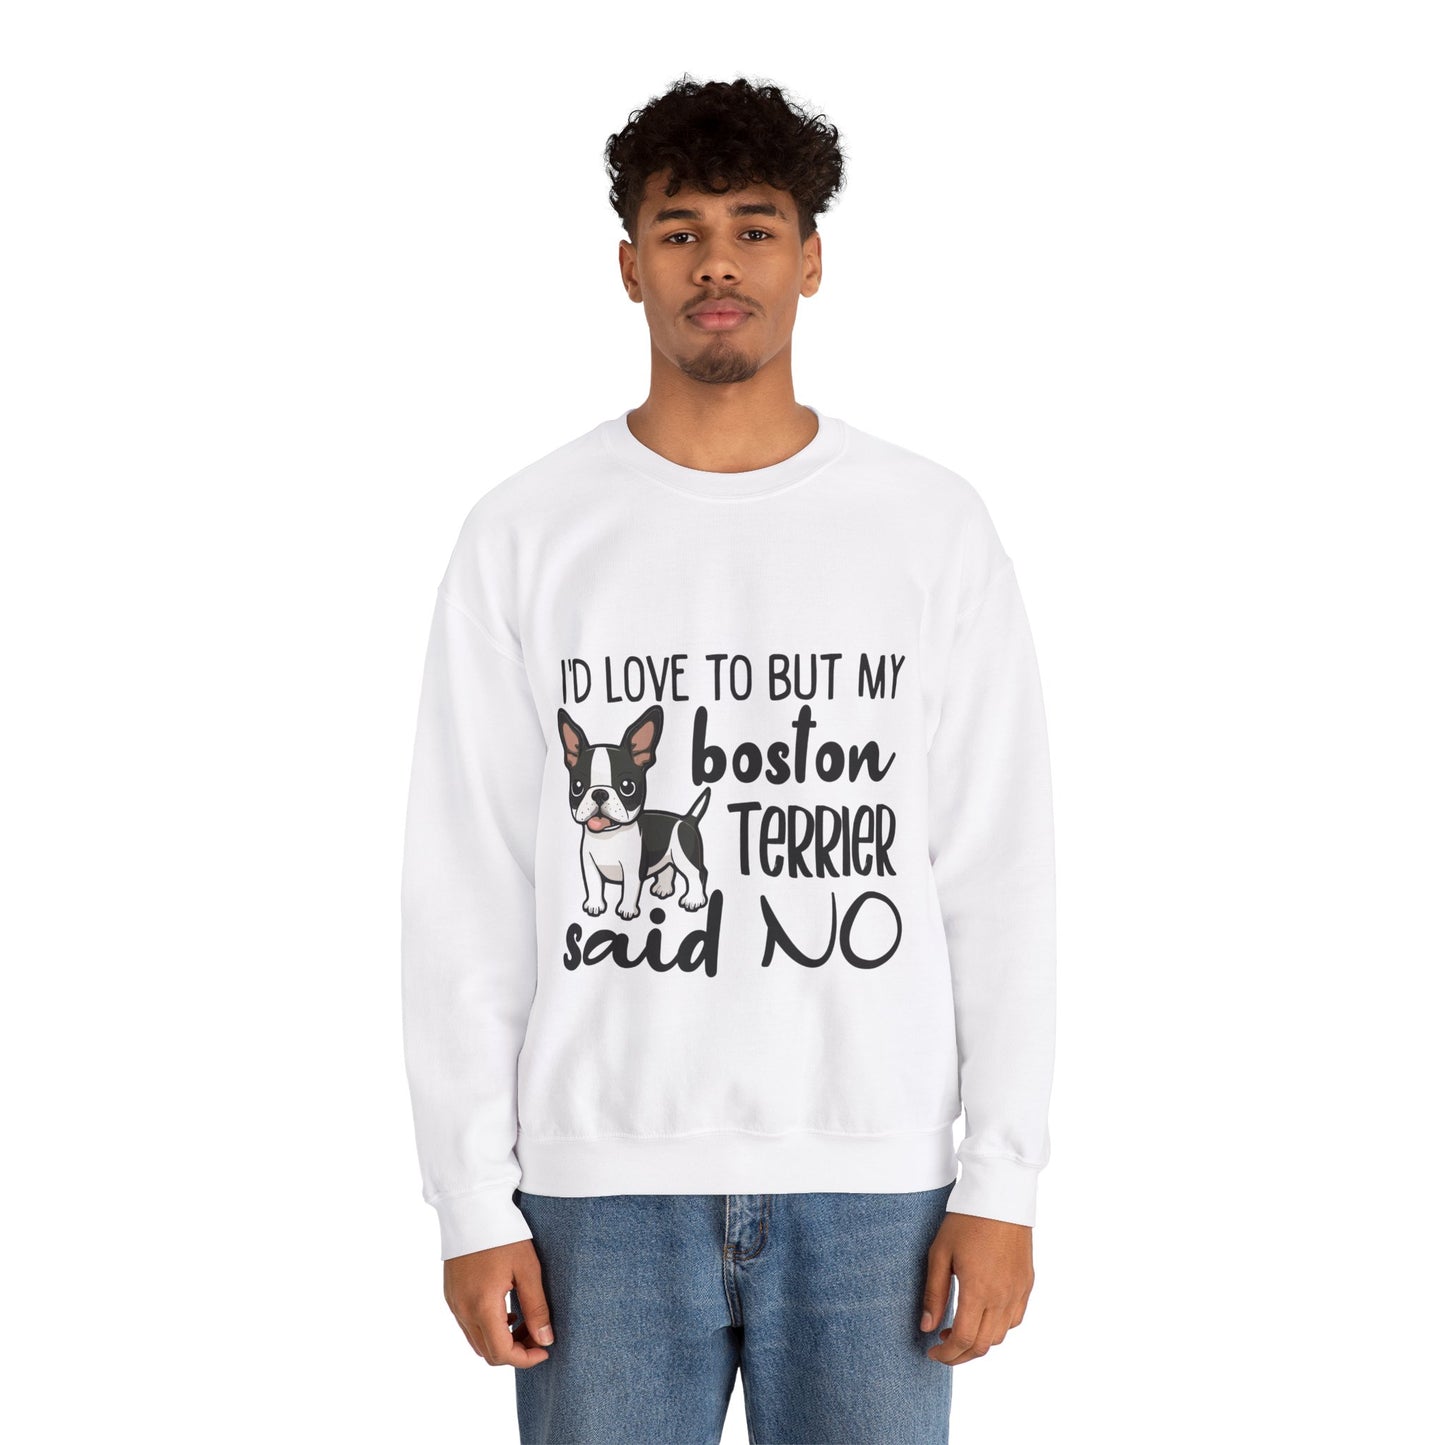 Scooter  - Unisex Sweatshirt for Boston Terrier lovers